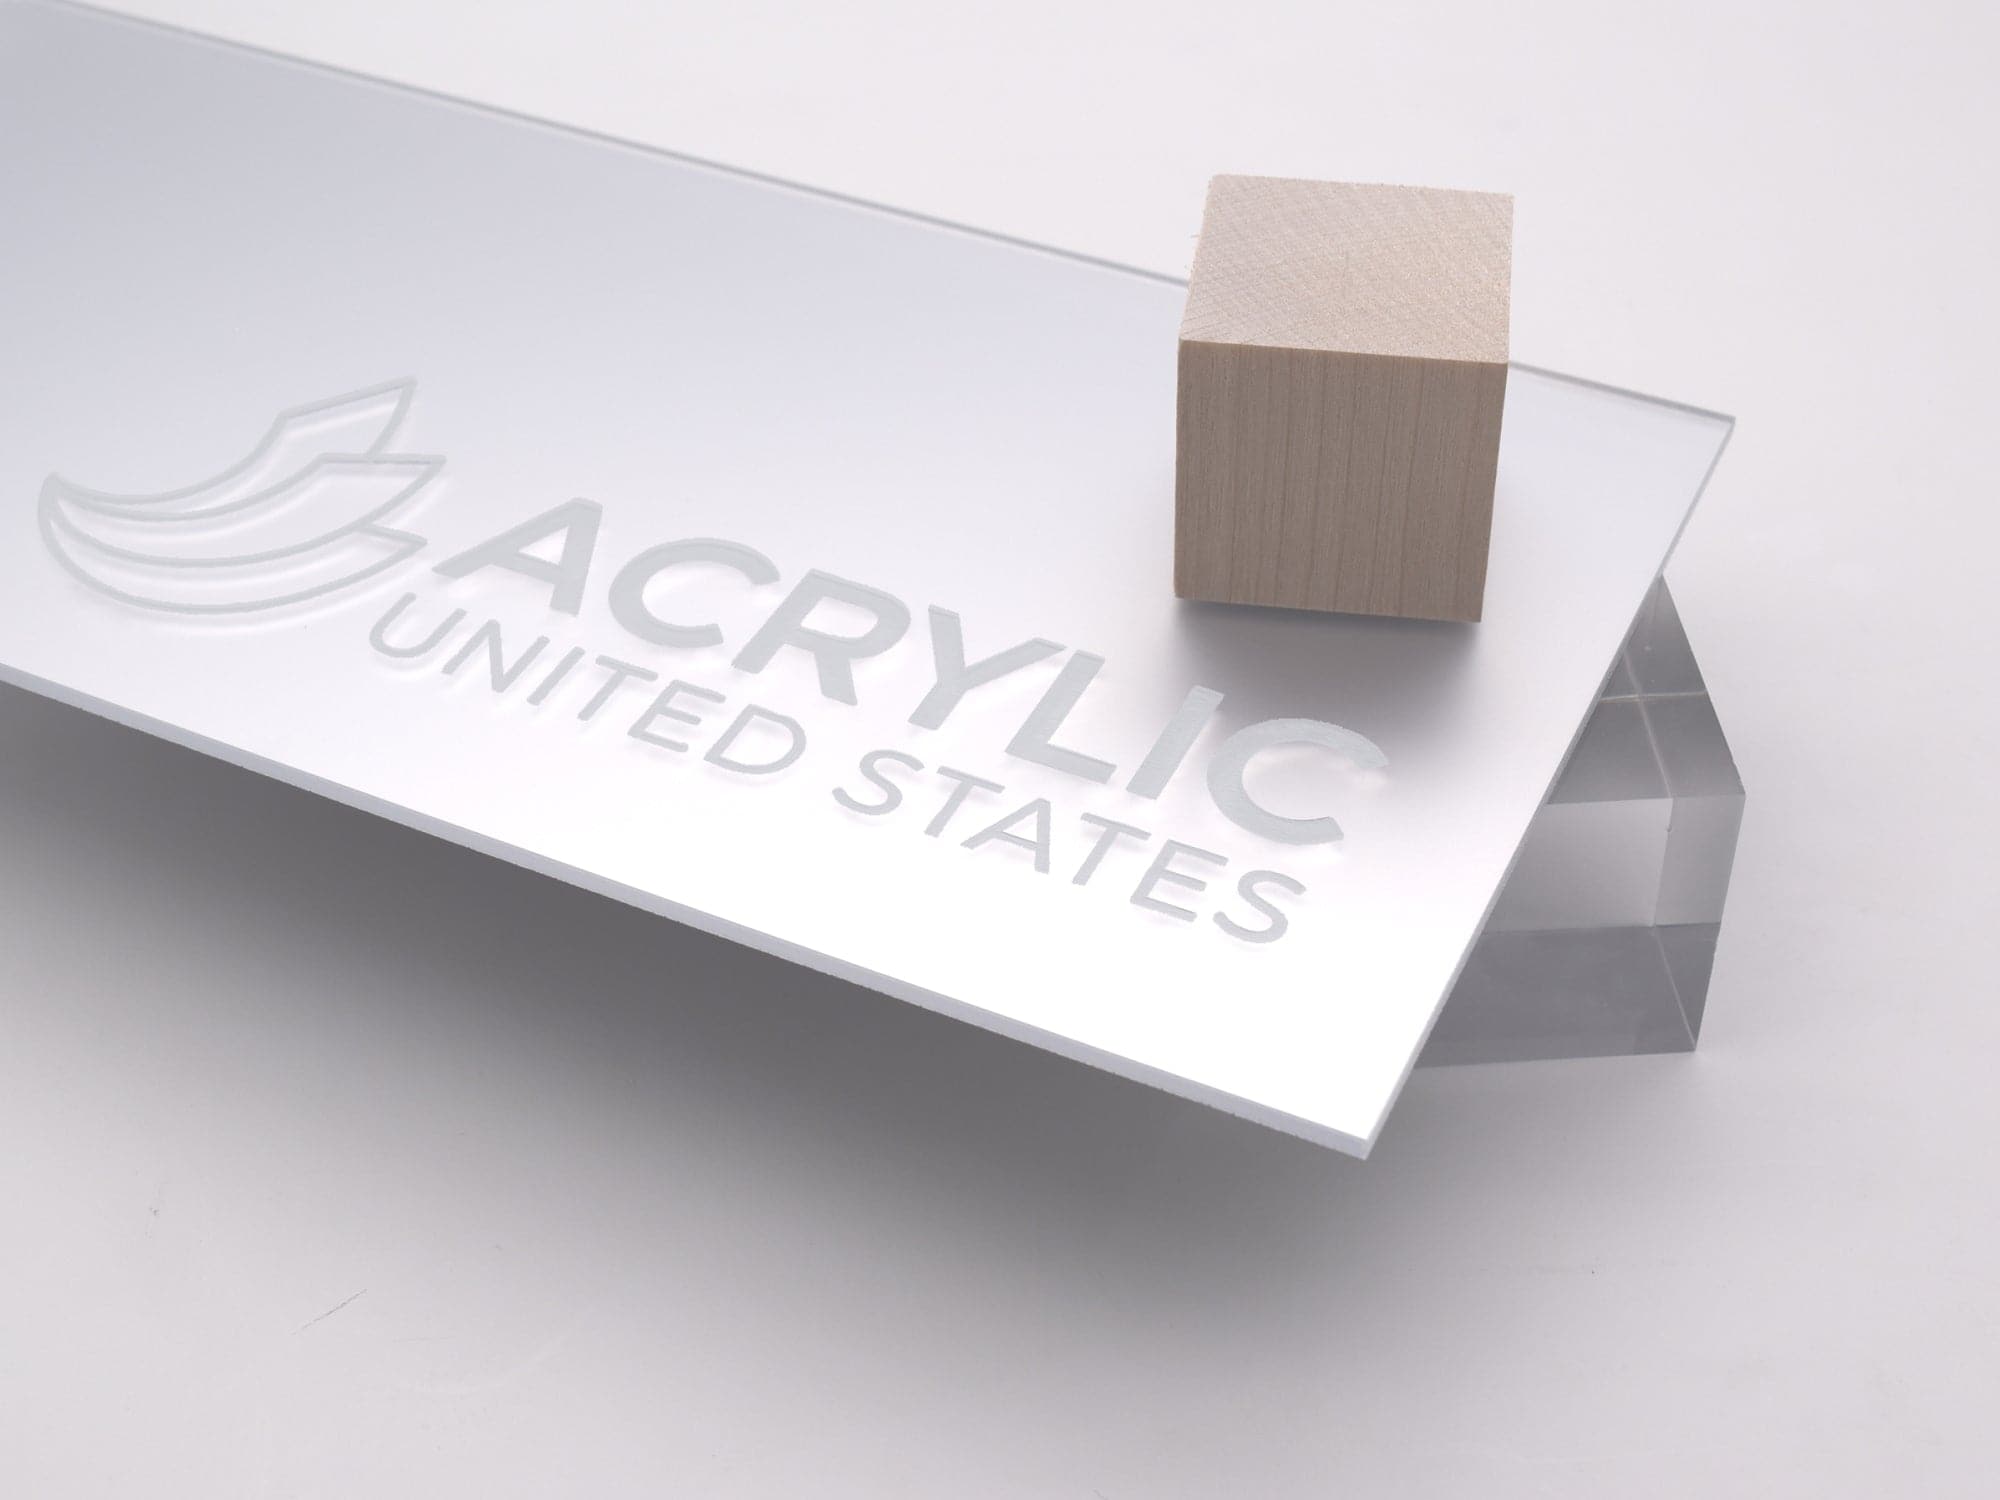 Silver mirror acrylic sheet - Premium Quality